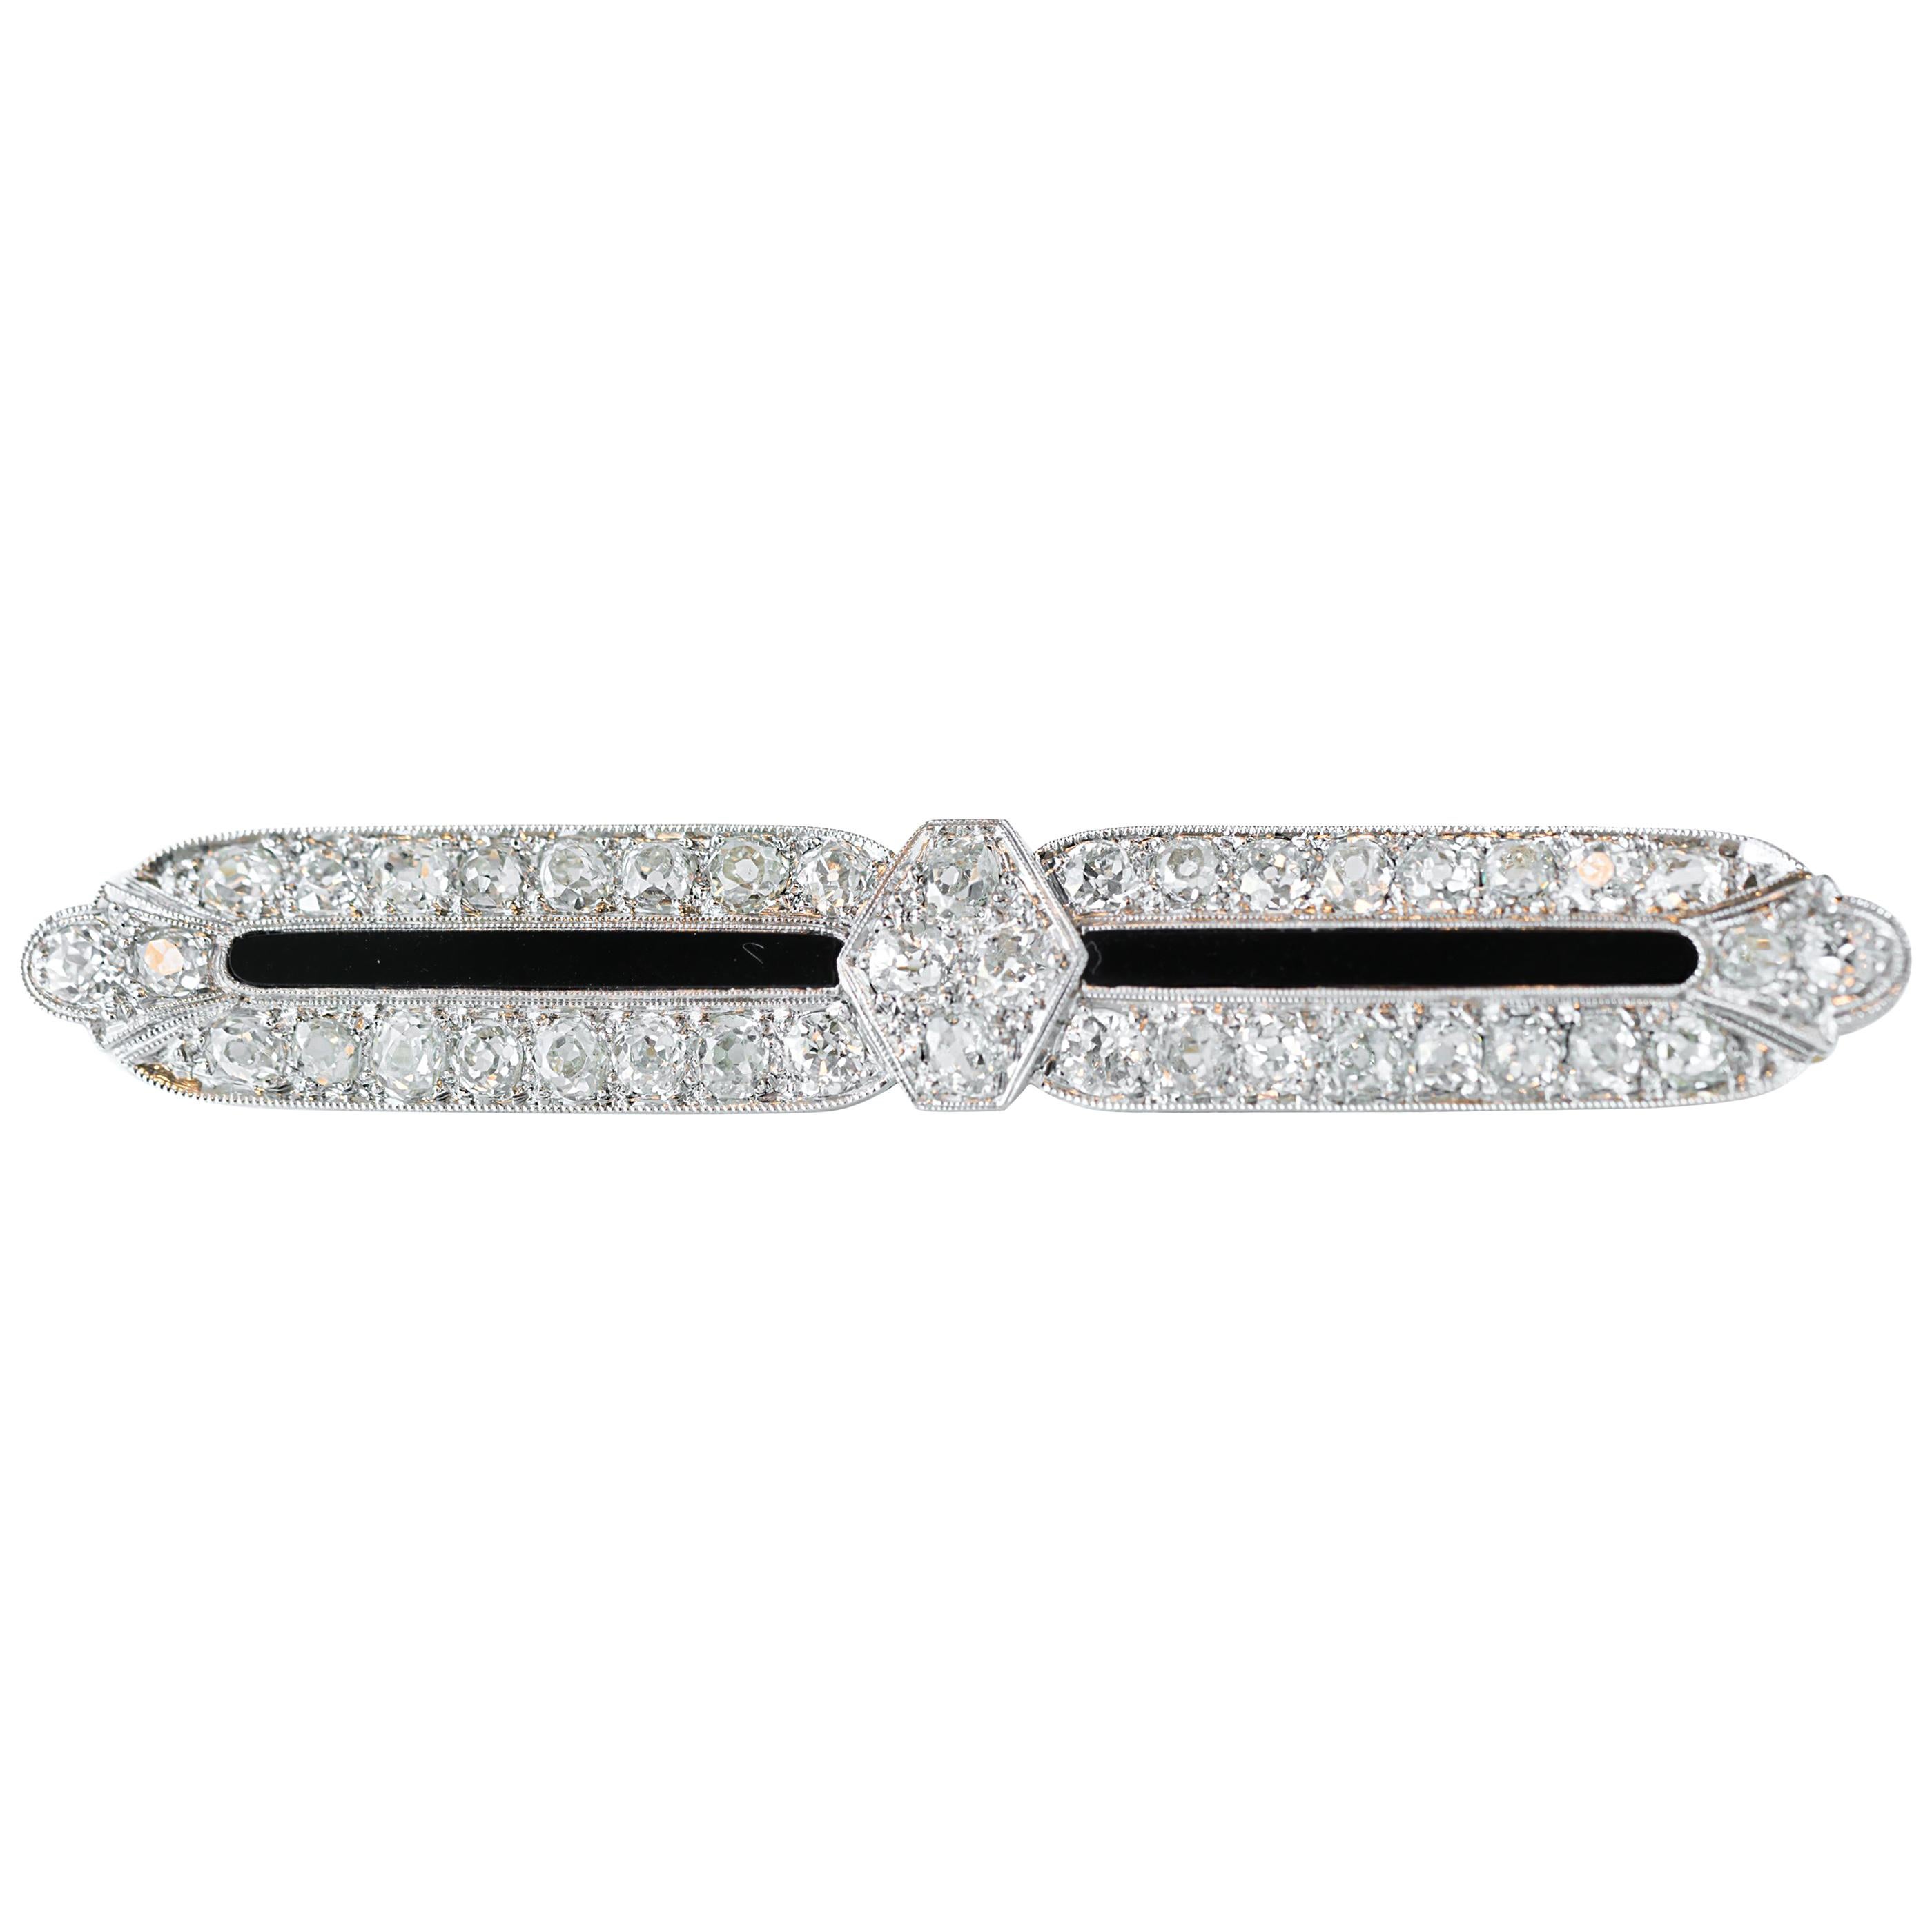 Tiffany & Co. 4 Carat Total Diamond and Onyx Platinum Bar Pin Brooch